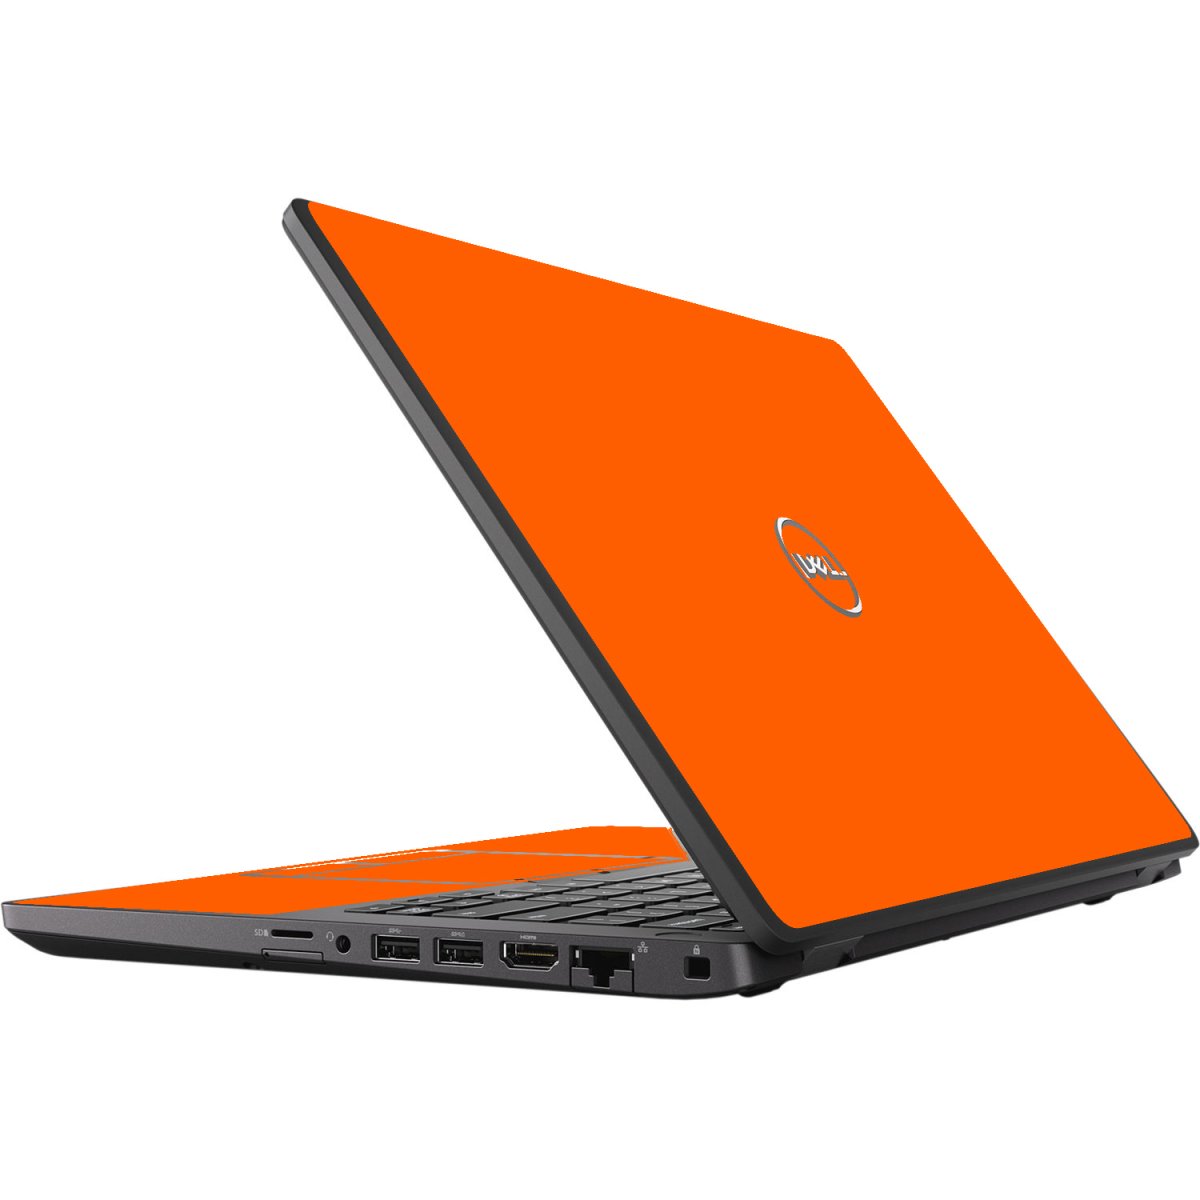 Dell Latitude 5400 ORANGE Laptop Skin 